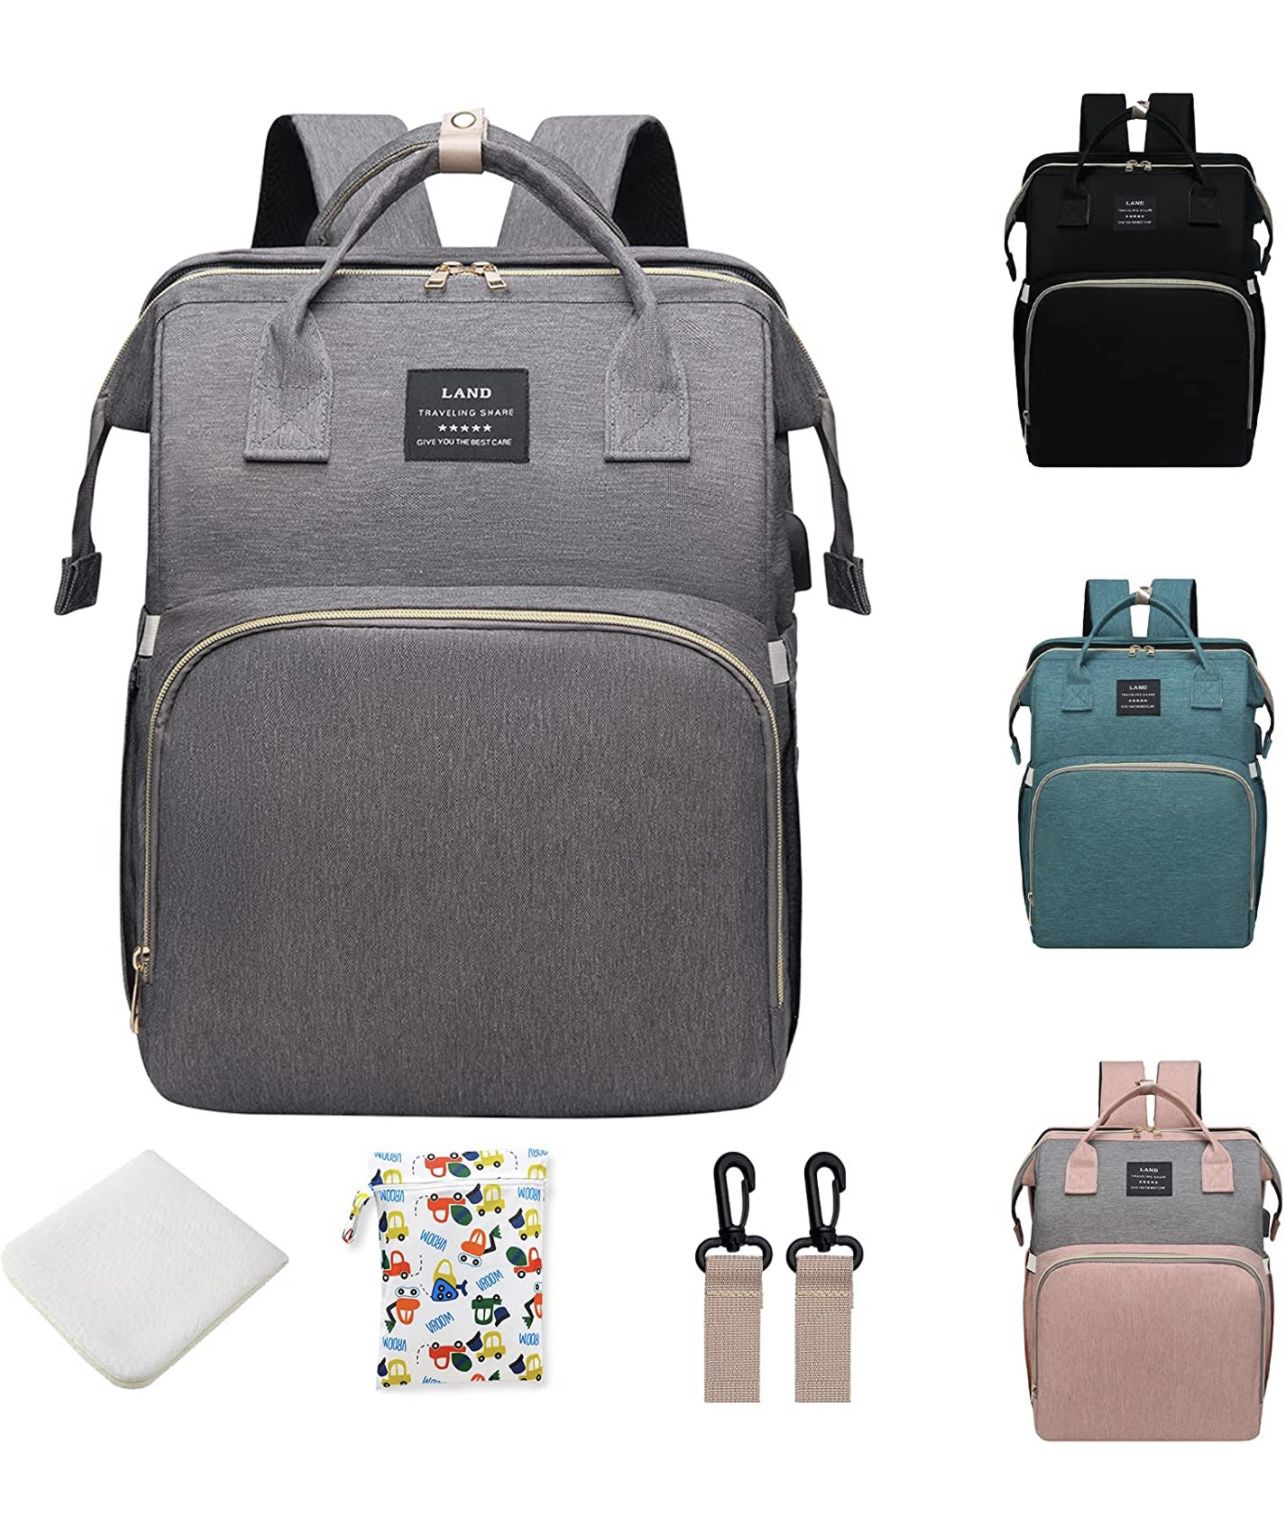 ANWTOTU Diaper Bag Backpack,7 in 1 Travel Diaper Bag,Mommy Bag With USB Charging Port (Grey)